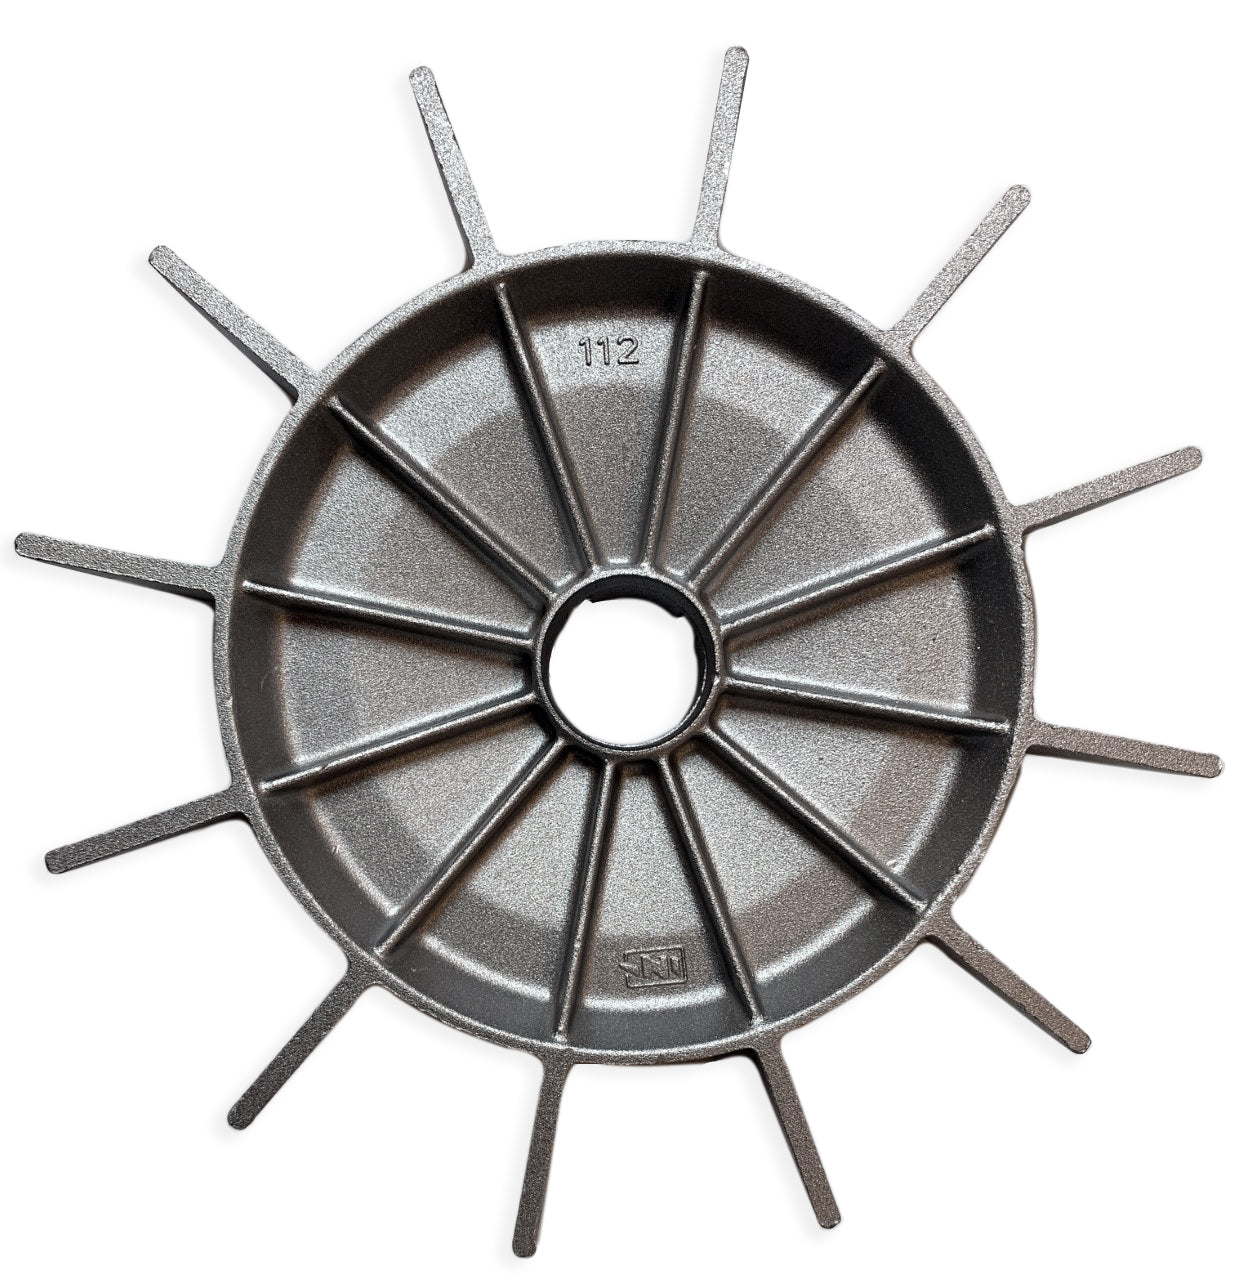 ISGEV Aluminum Fan for 5BS 112 MB4-6 motor - ppdistributors